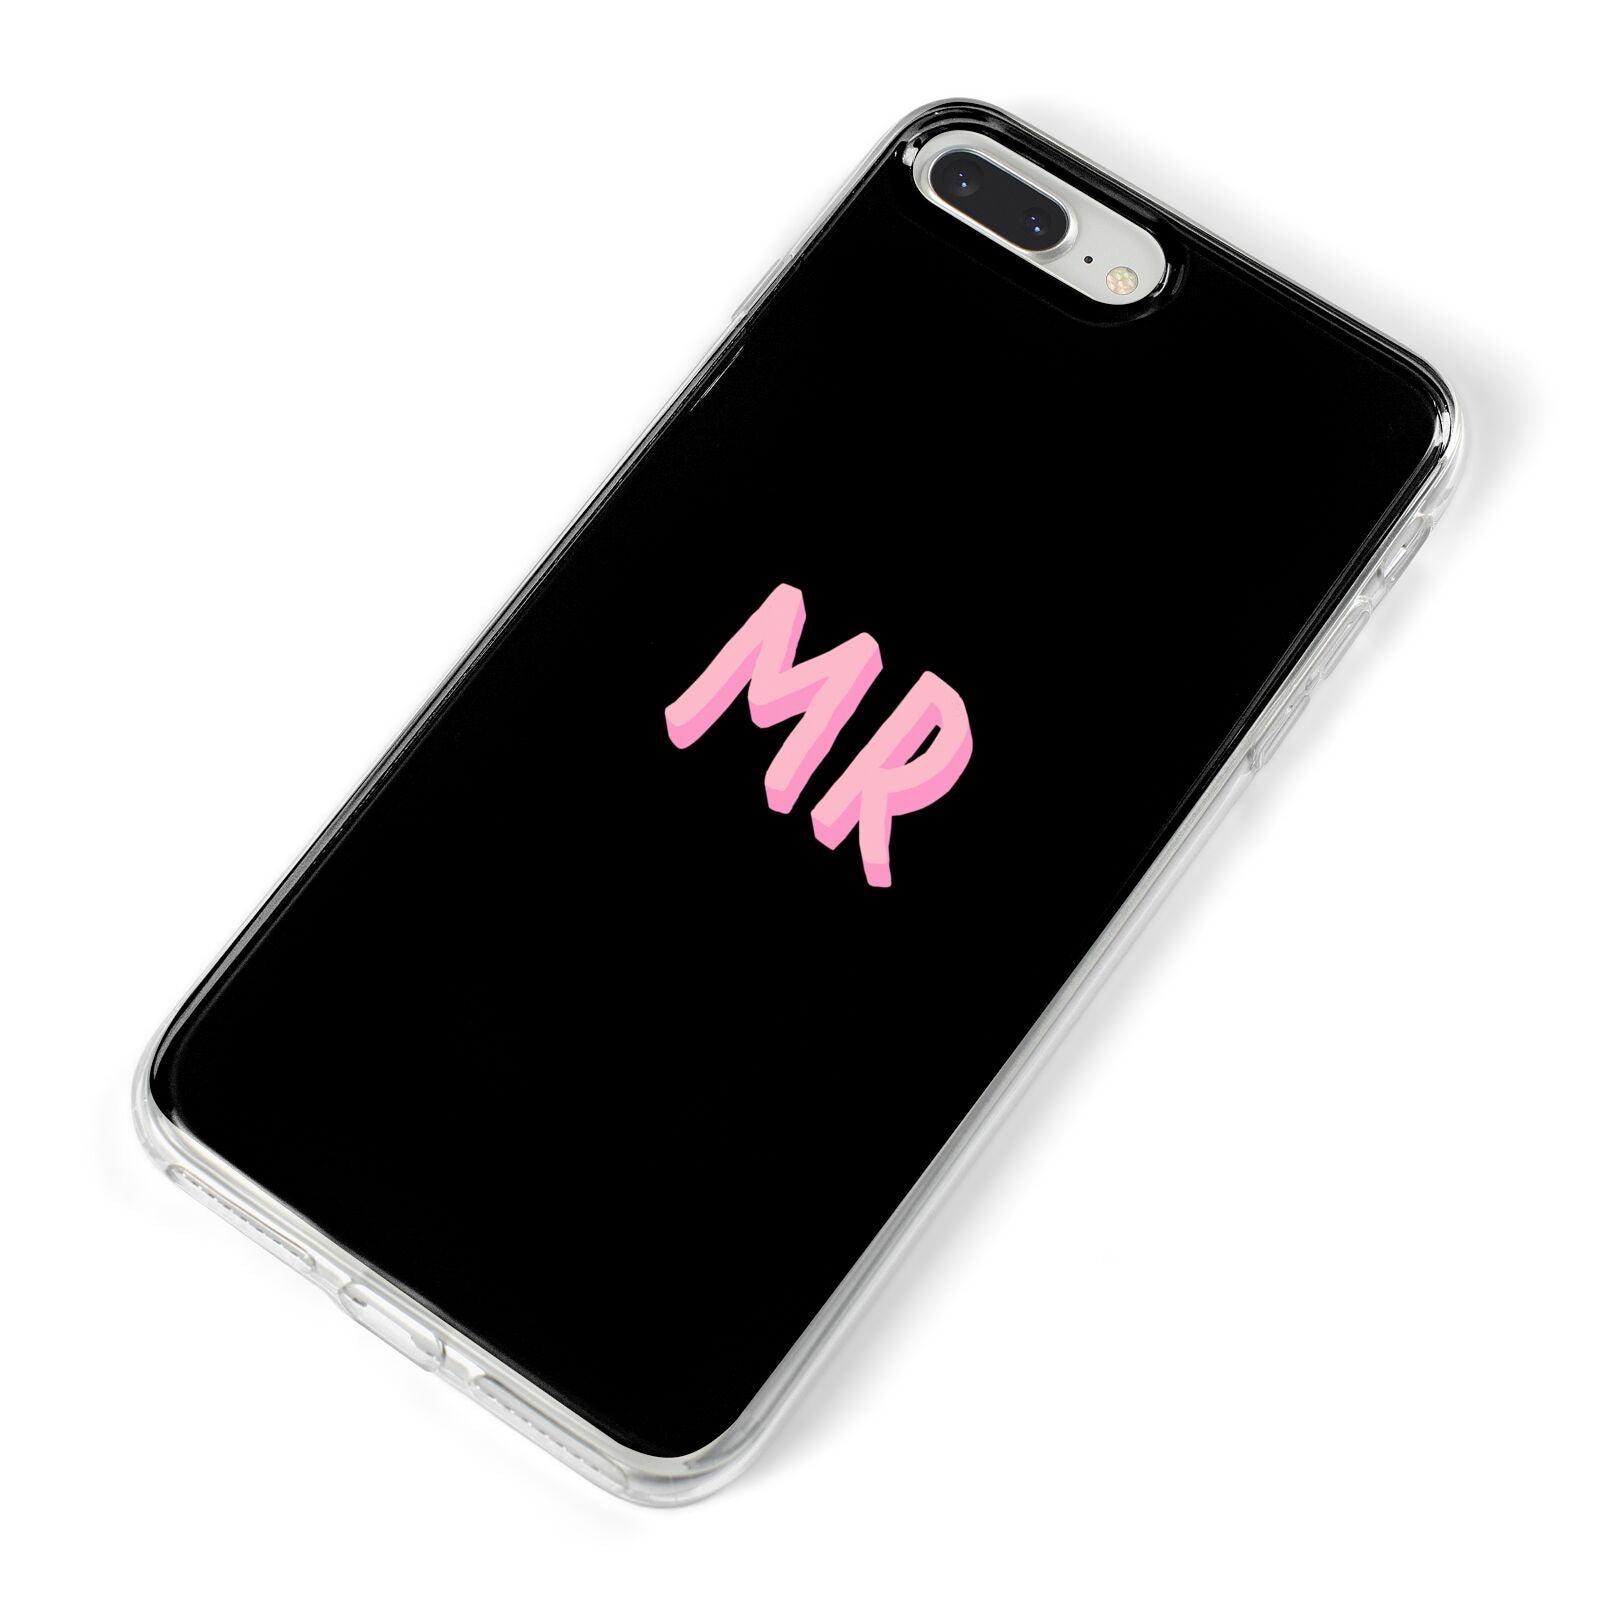 Mr iPhone 8 Plus Bumper Case on Silver iPhone Alternative Image